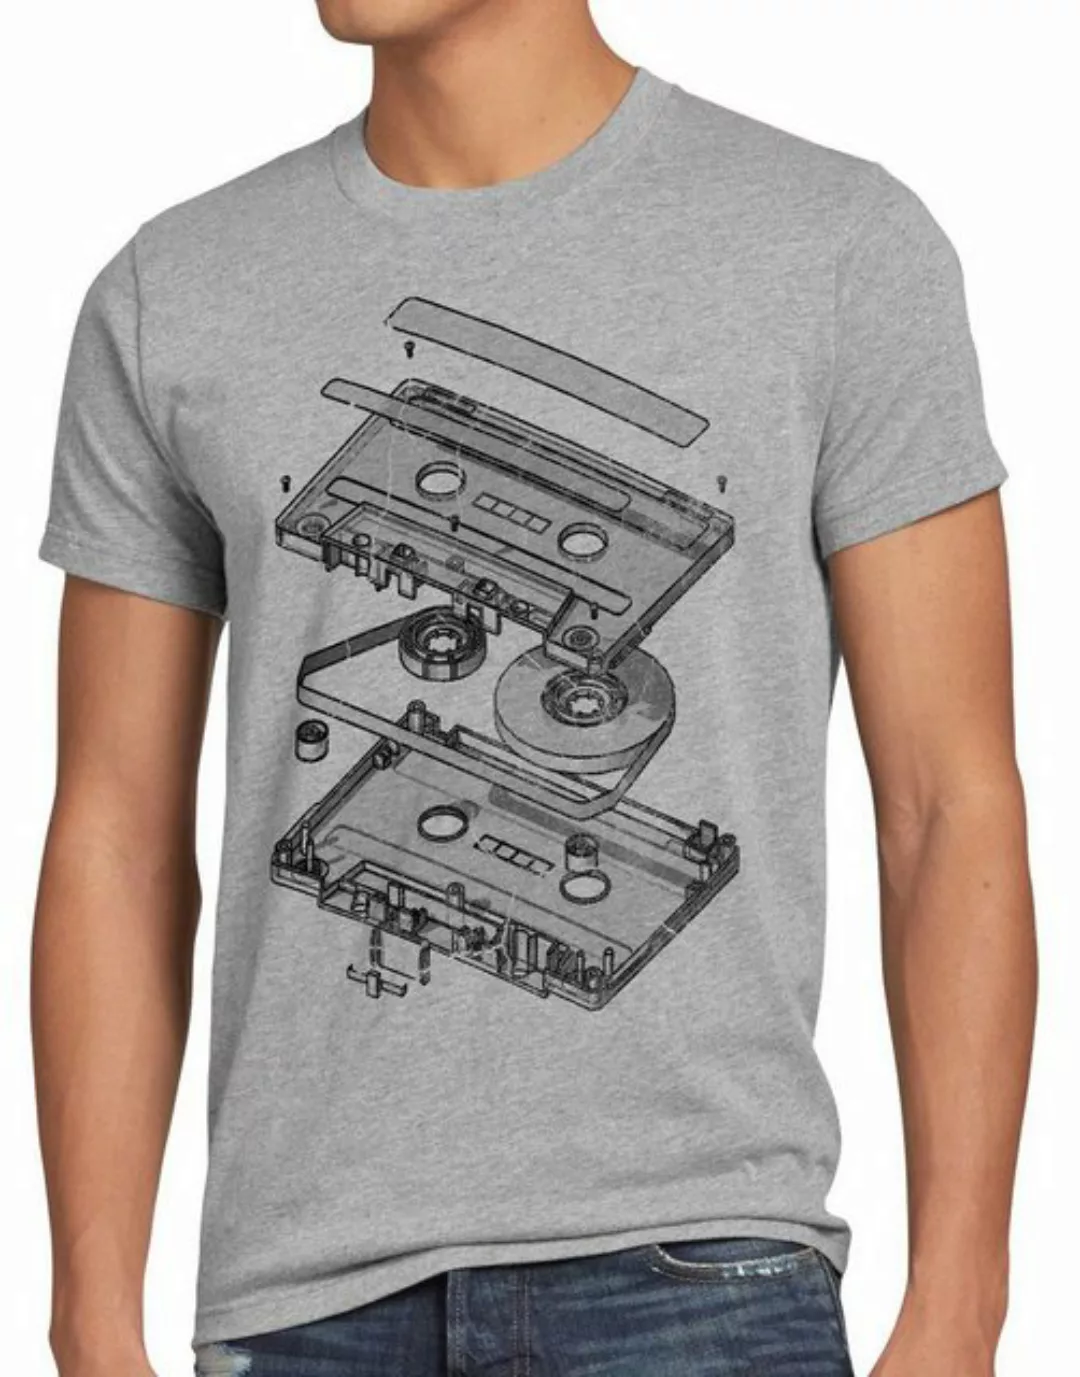 style3 Print-Shirt Herren T-Shirt Tape Kassette mc dj 3D turntable ndw anal günstig online kaufen